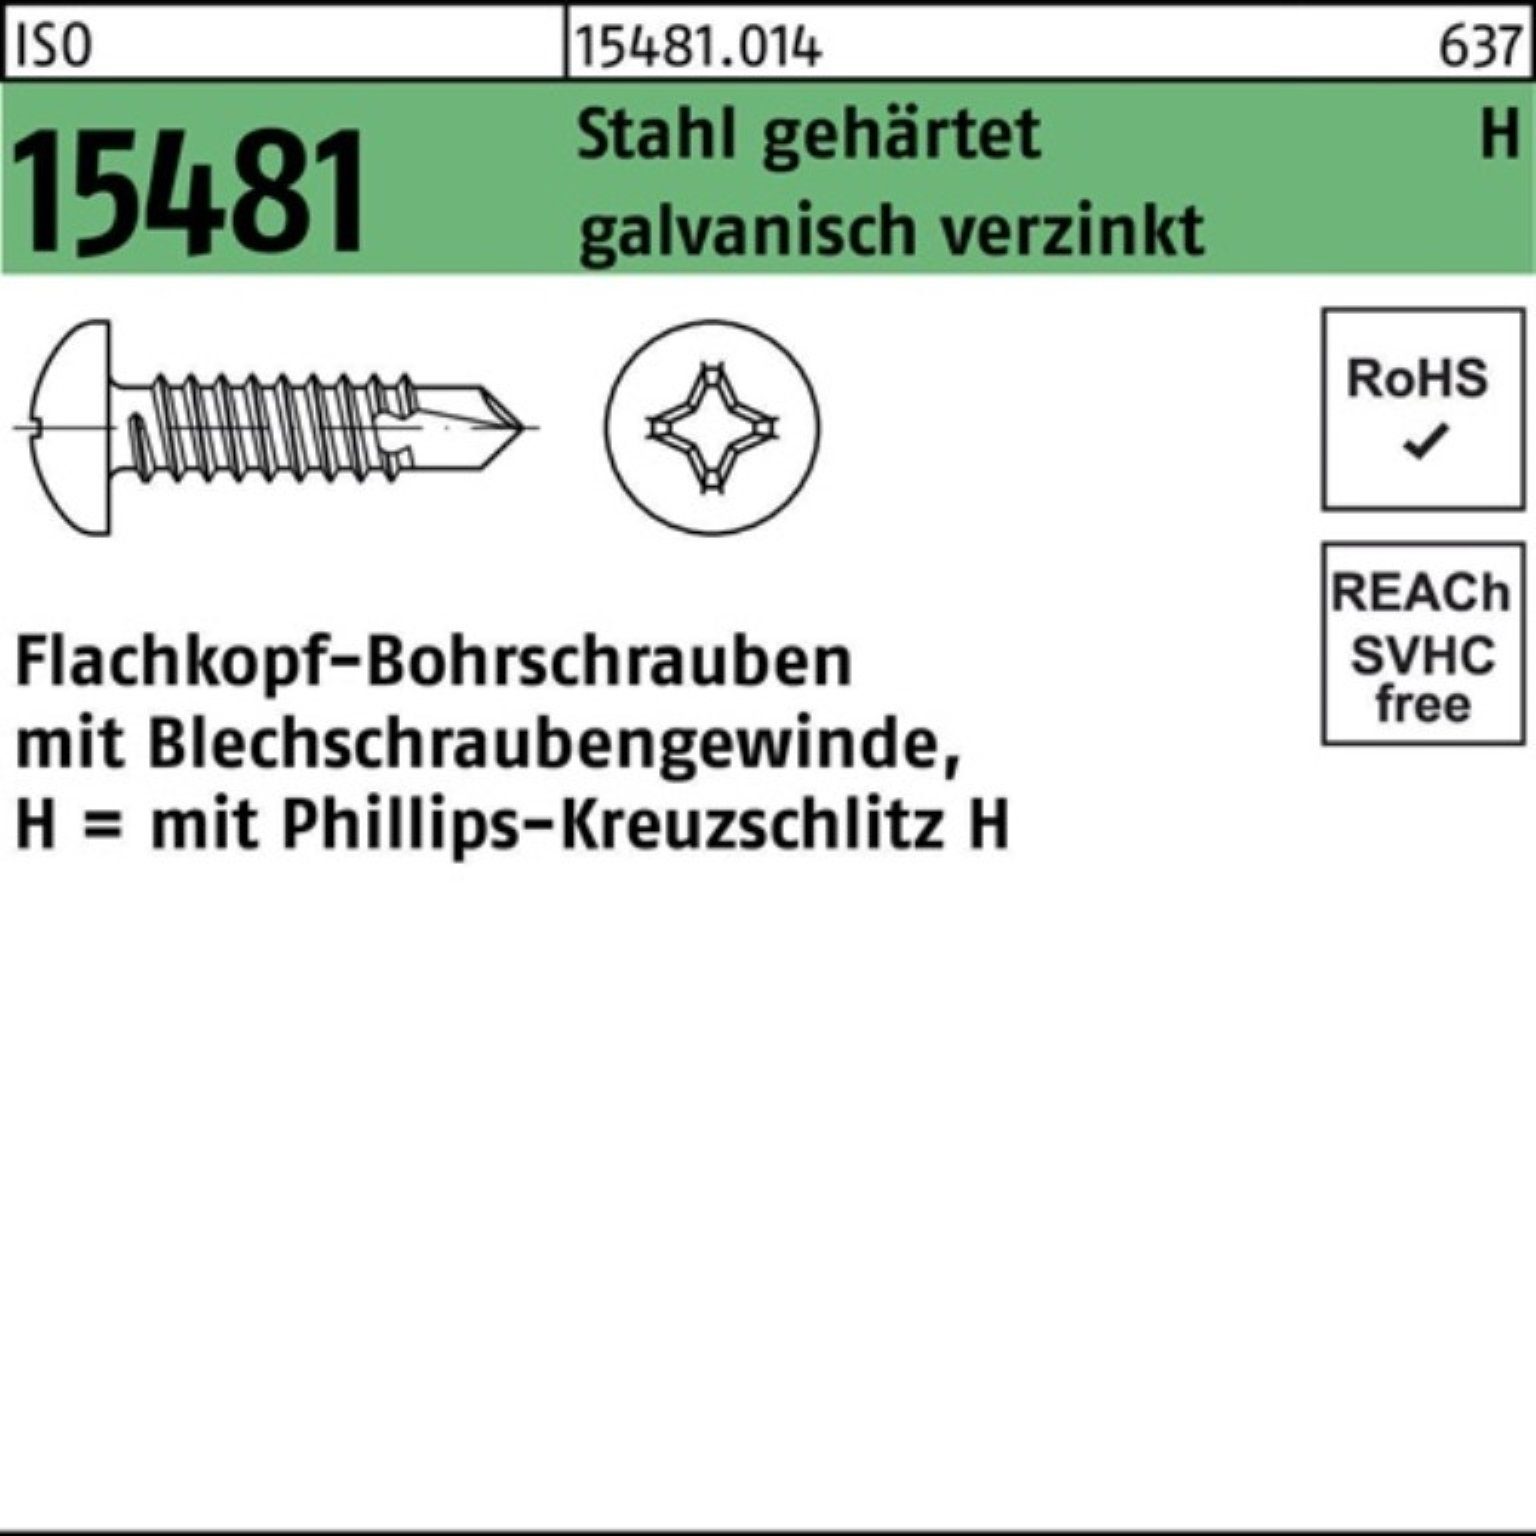 Reyher Bohrschraube 1000er Pack FLAKObohrschraube ISO 15481 PH ST 3,9x9,5-H Stahl gehärte